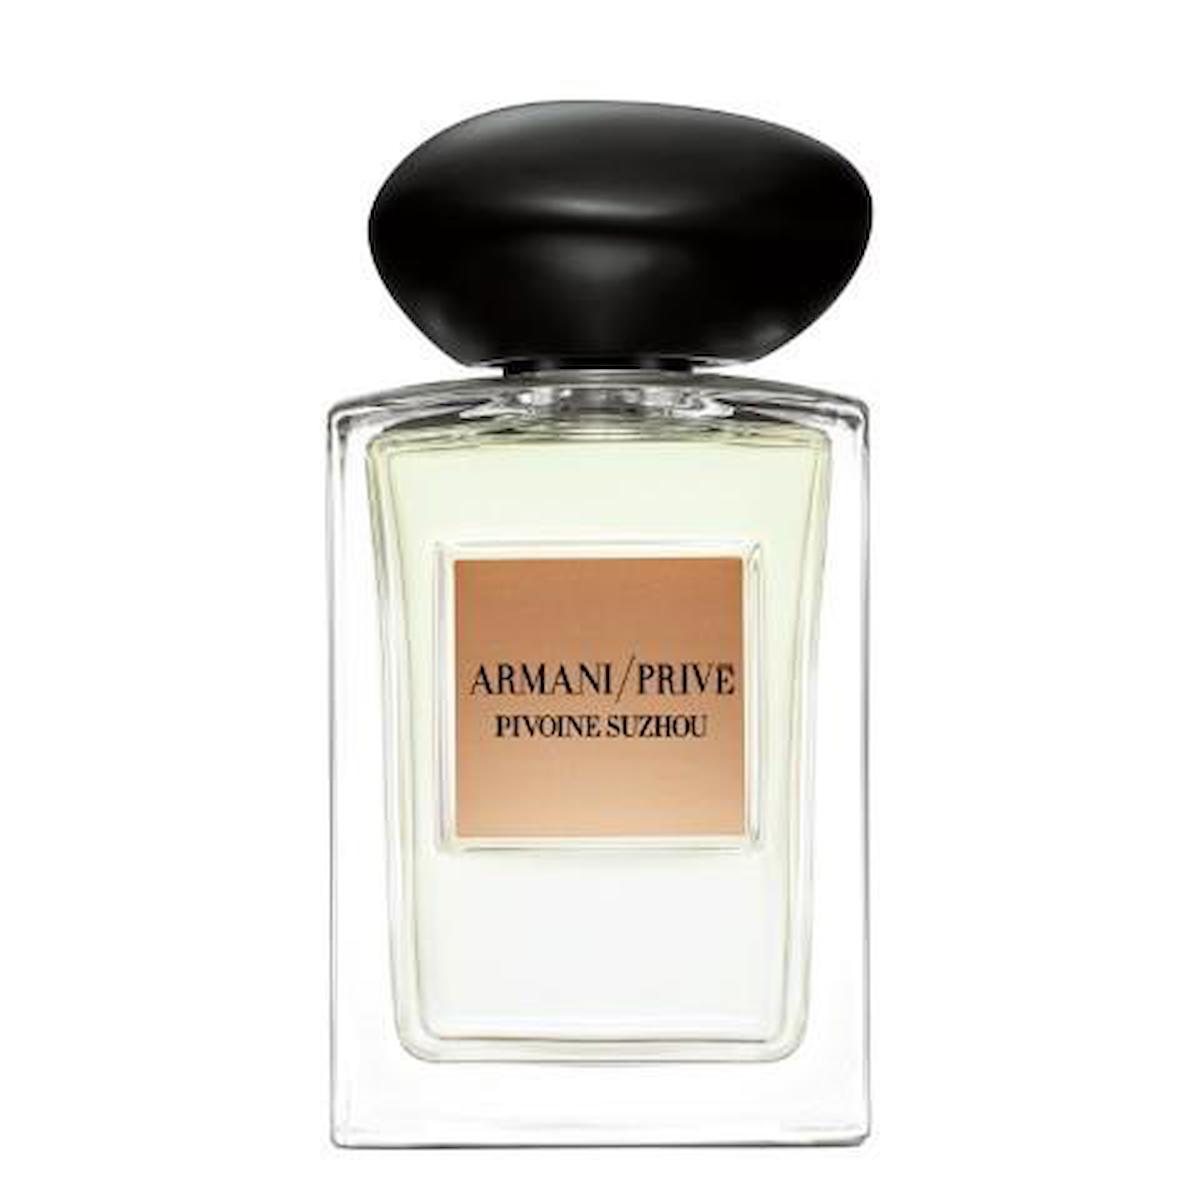 Giorgio Armani Prive Pivoine Suzhou EDT Çiçeksi-Meyvemsi Kadın Parfüm 100 ml